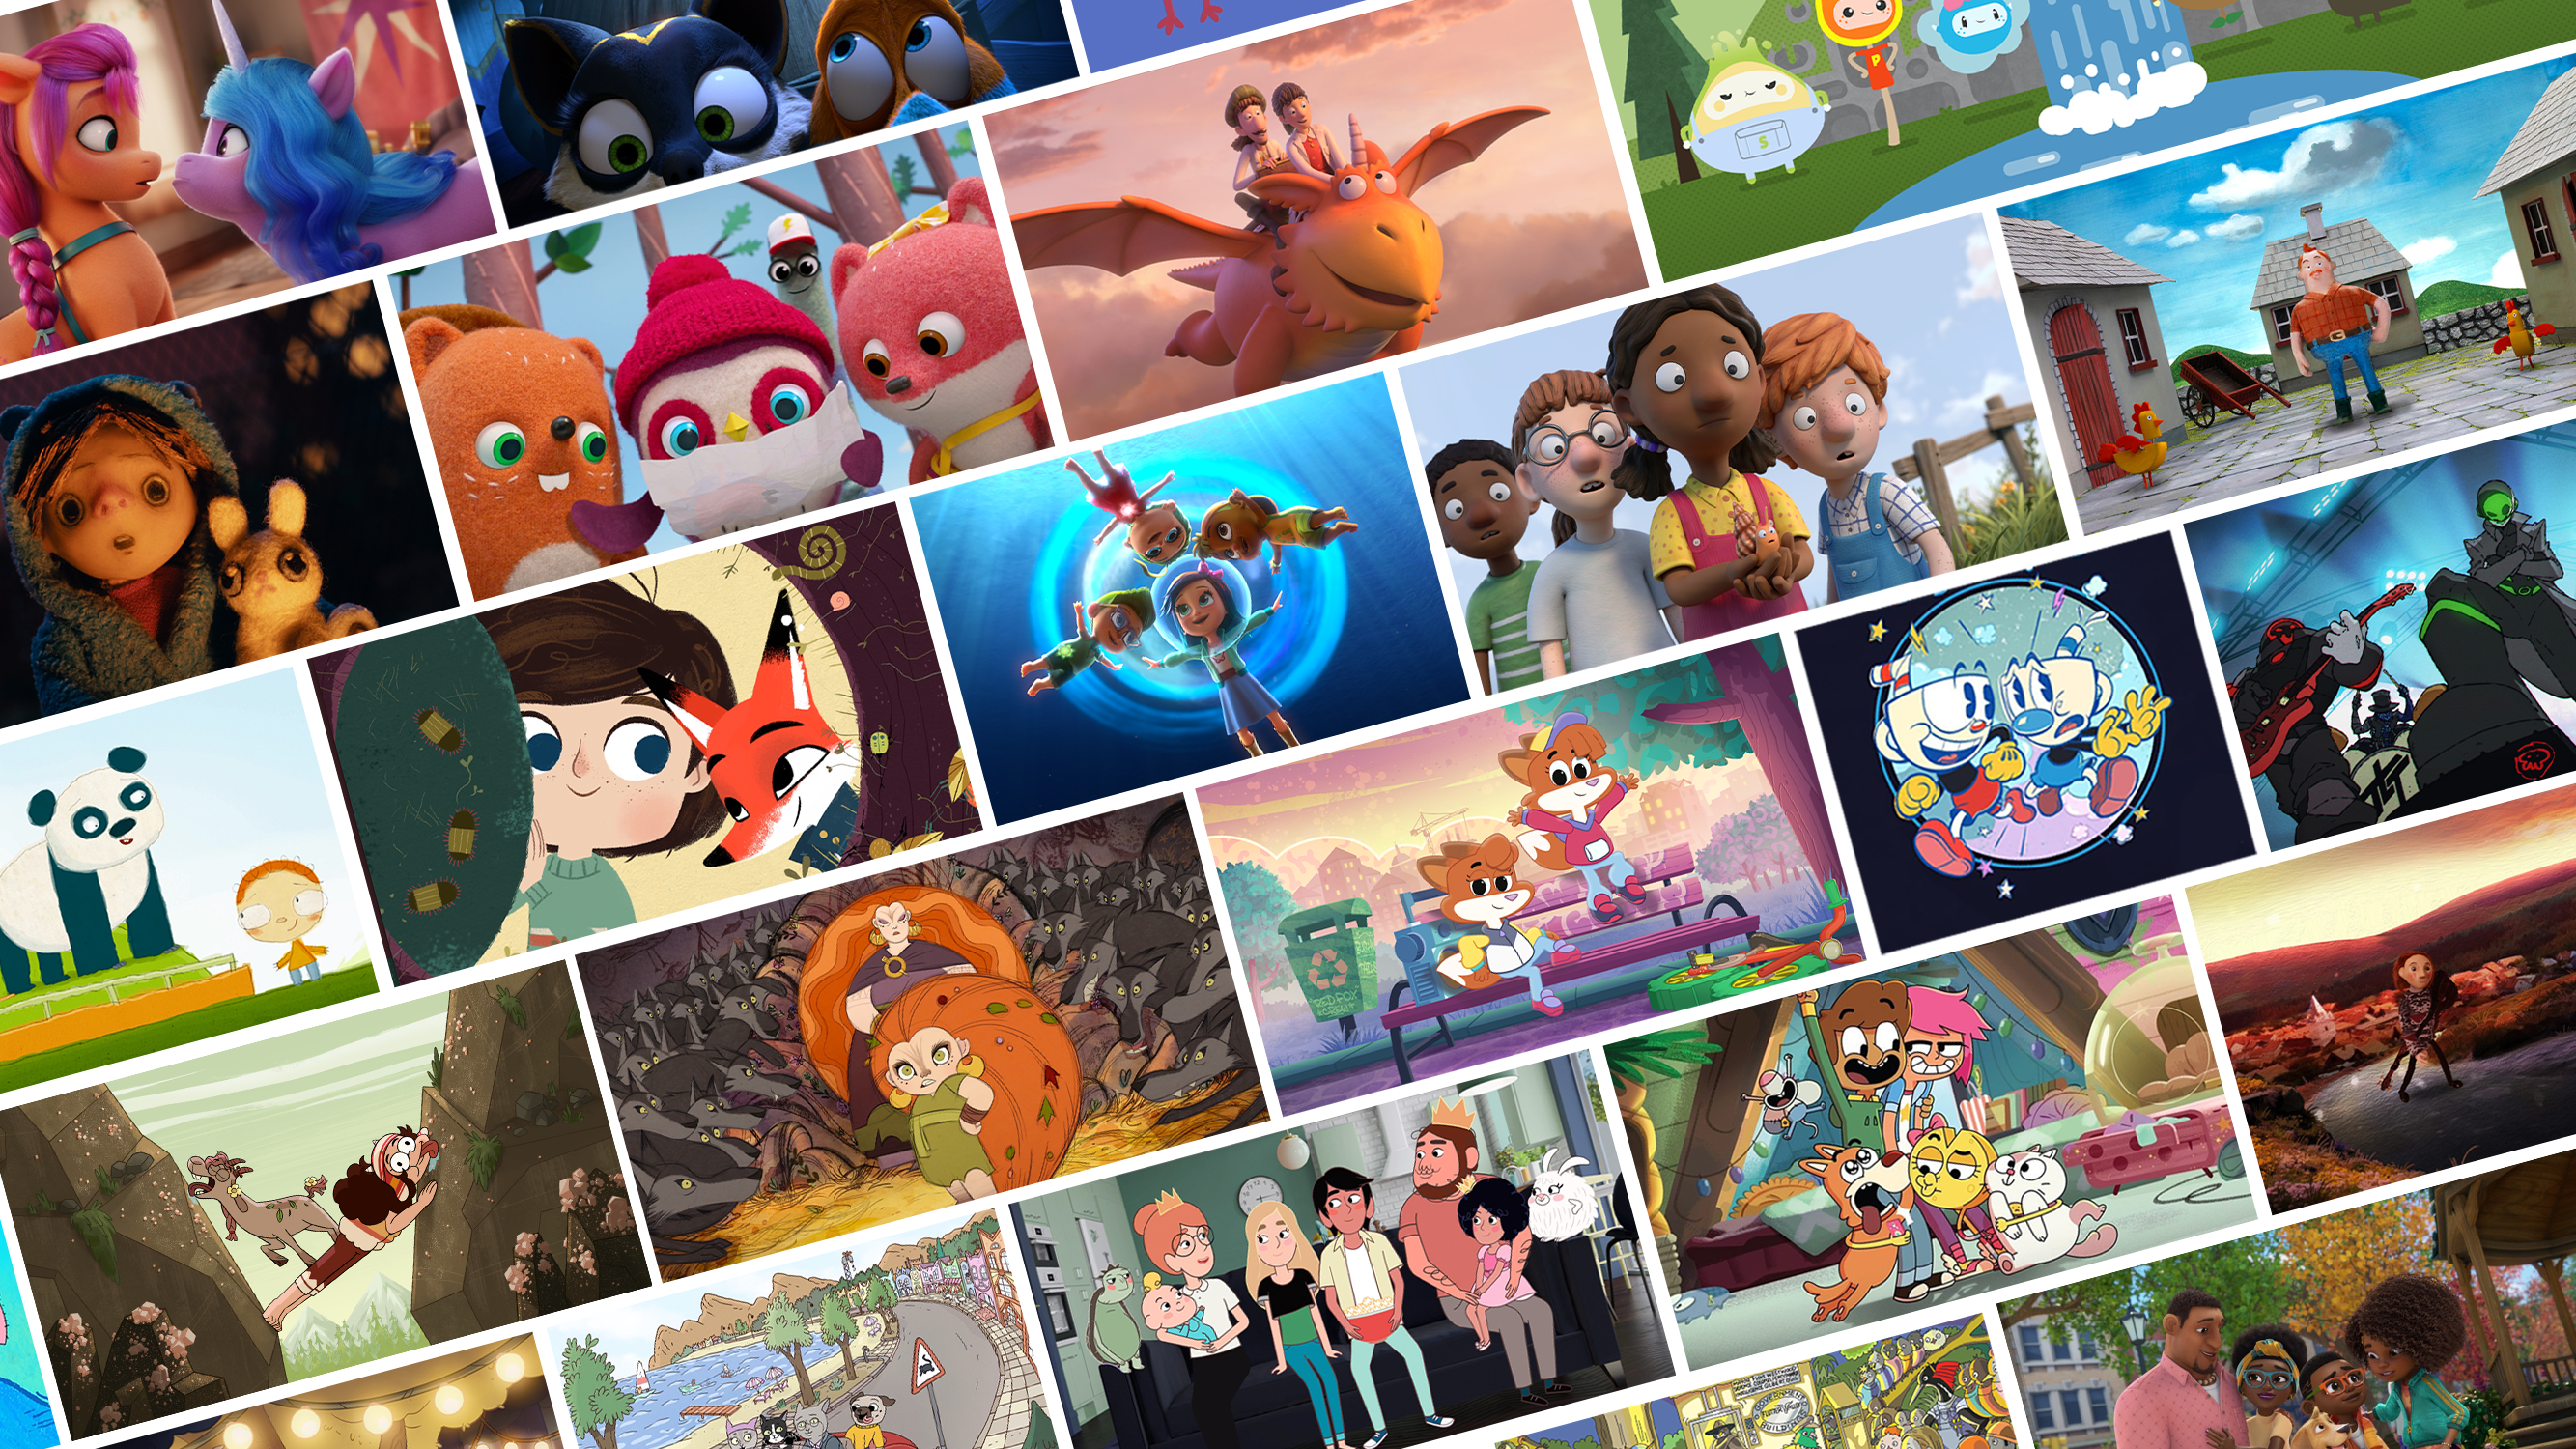 Animation Ireland - Representing Ireland's best animation studios